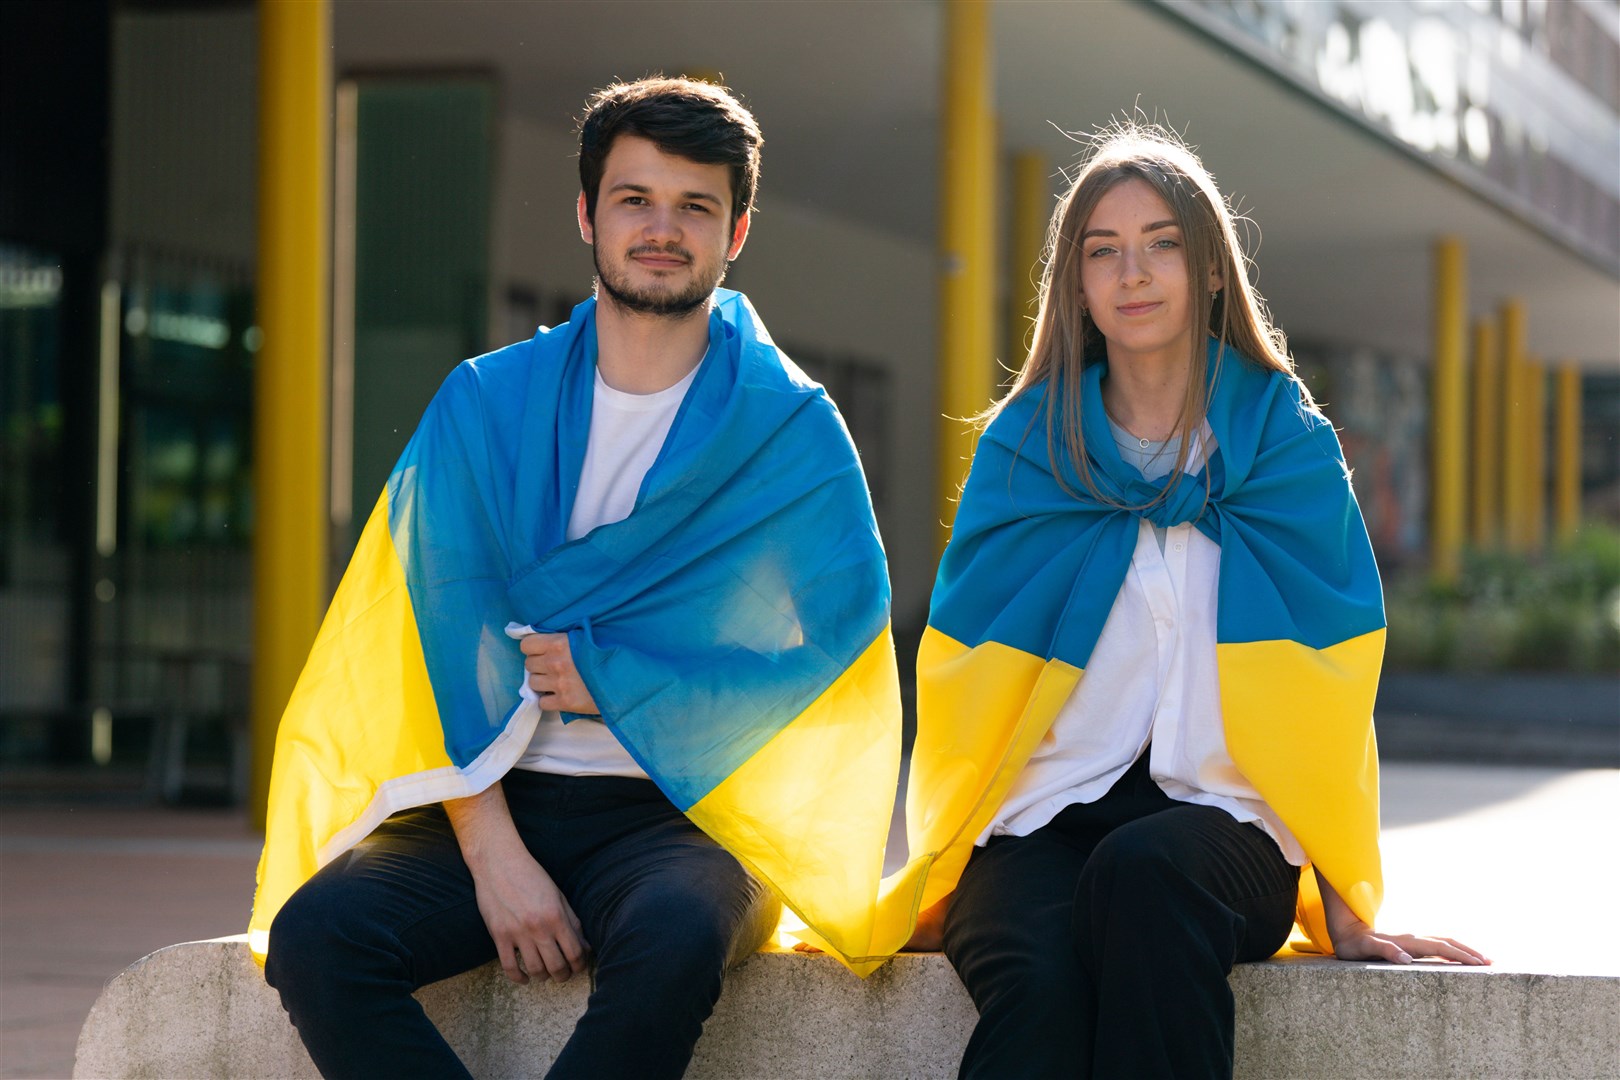 Ukrainian students Pavlo Denysenko and Snizhana Berezhna at Coventry University (Jacob King/PA)